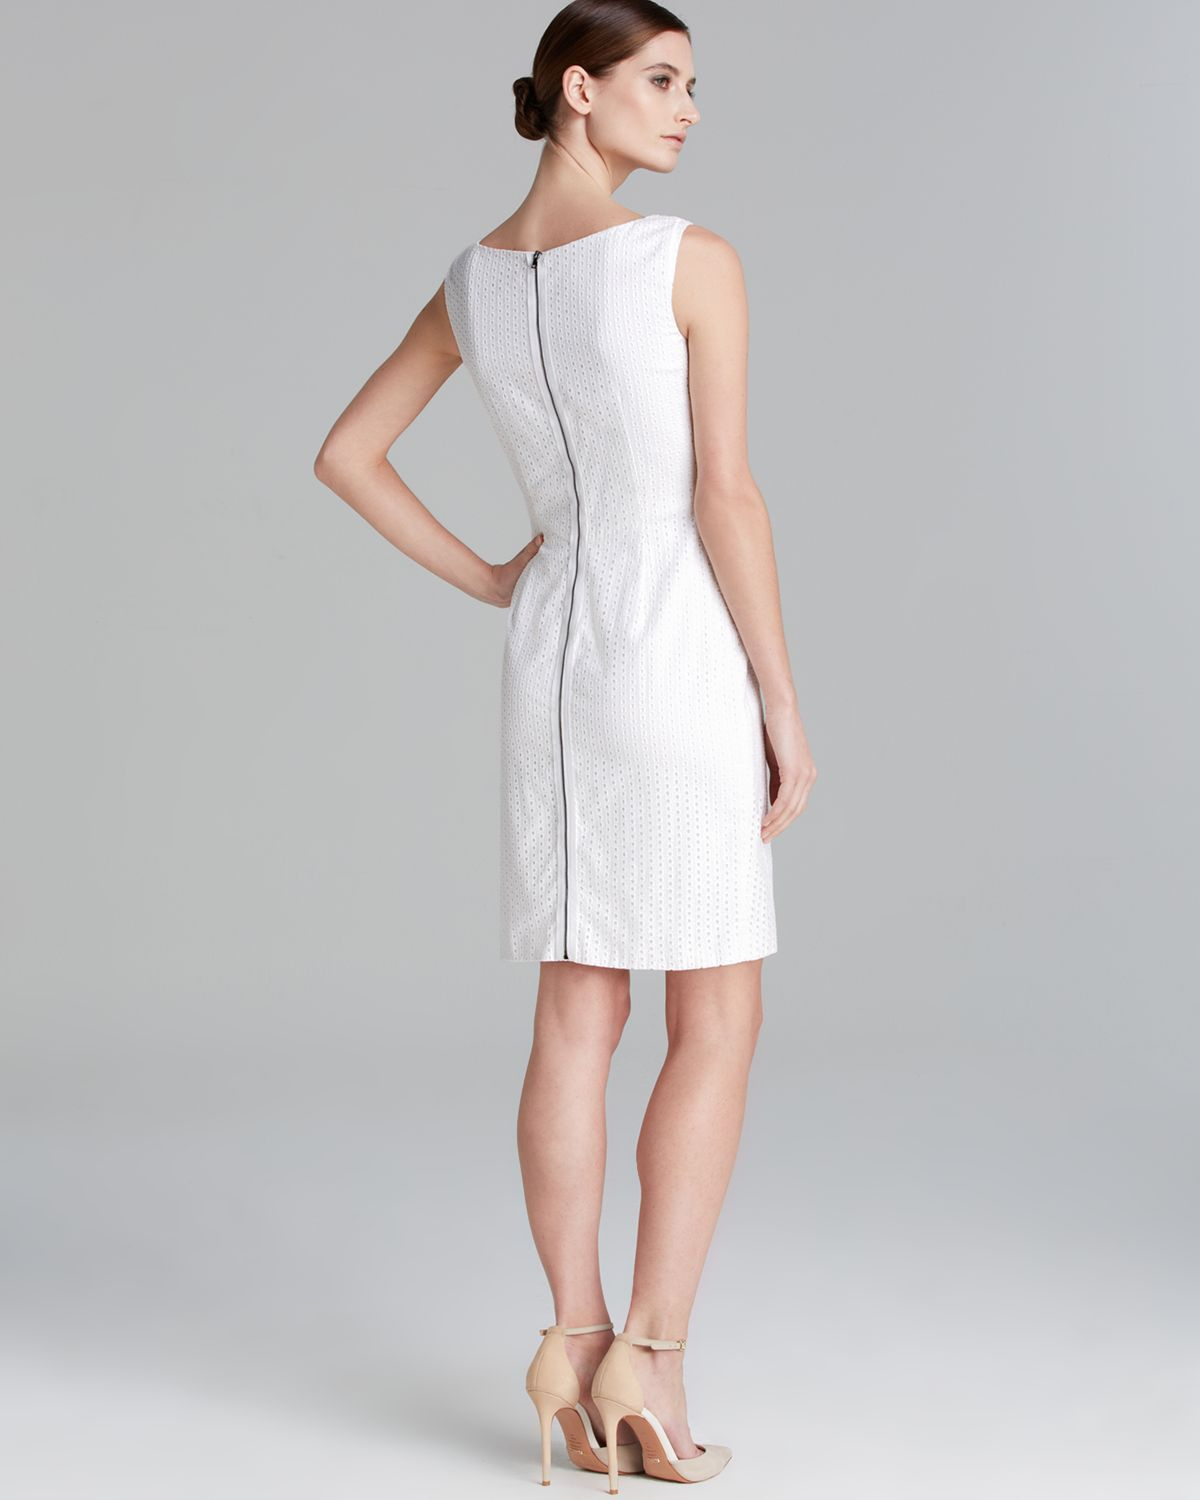 Classic white sheath dress patterns women Tucson Wear to Work Dresses ...